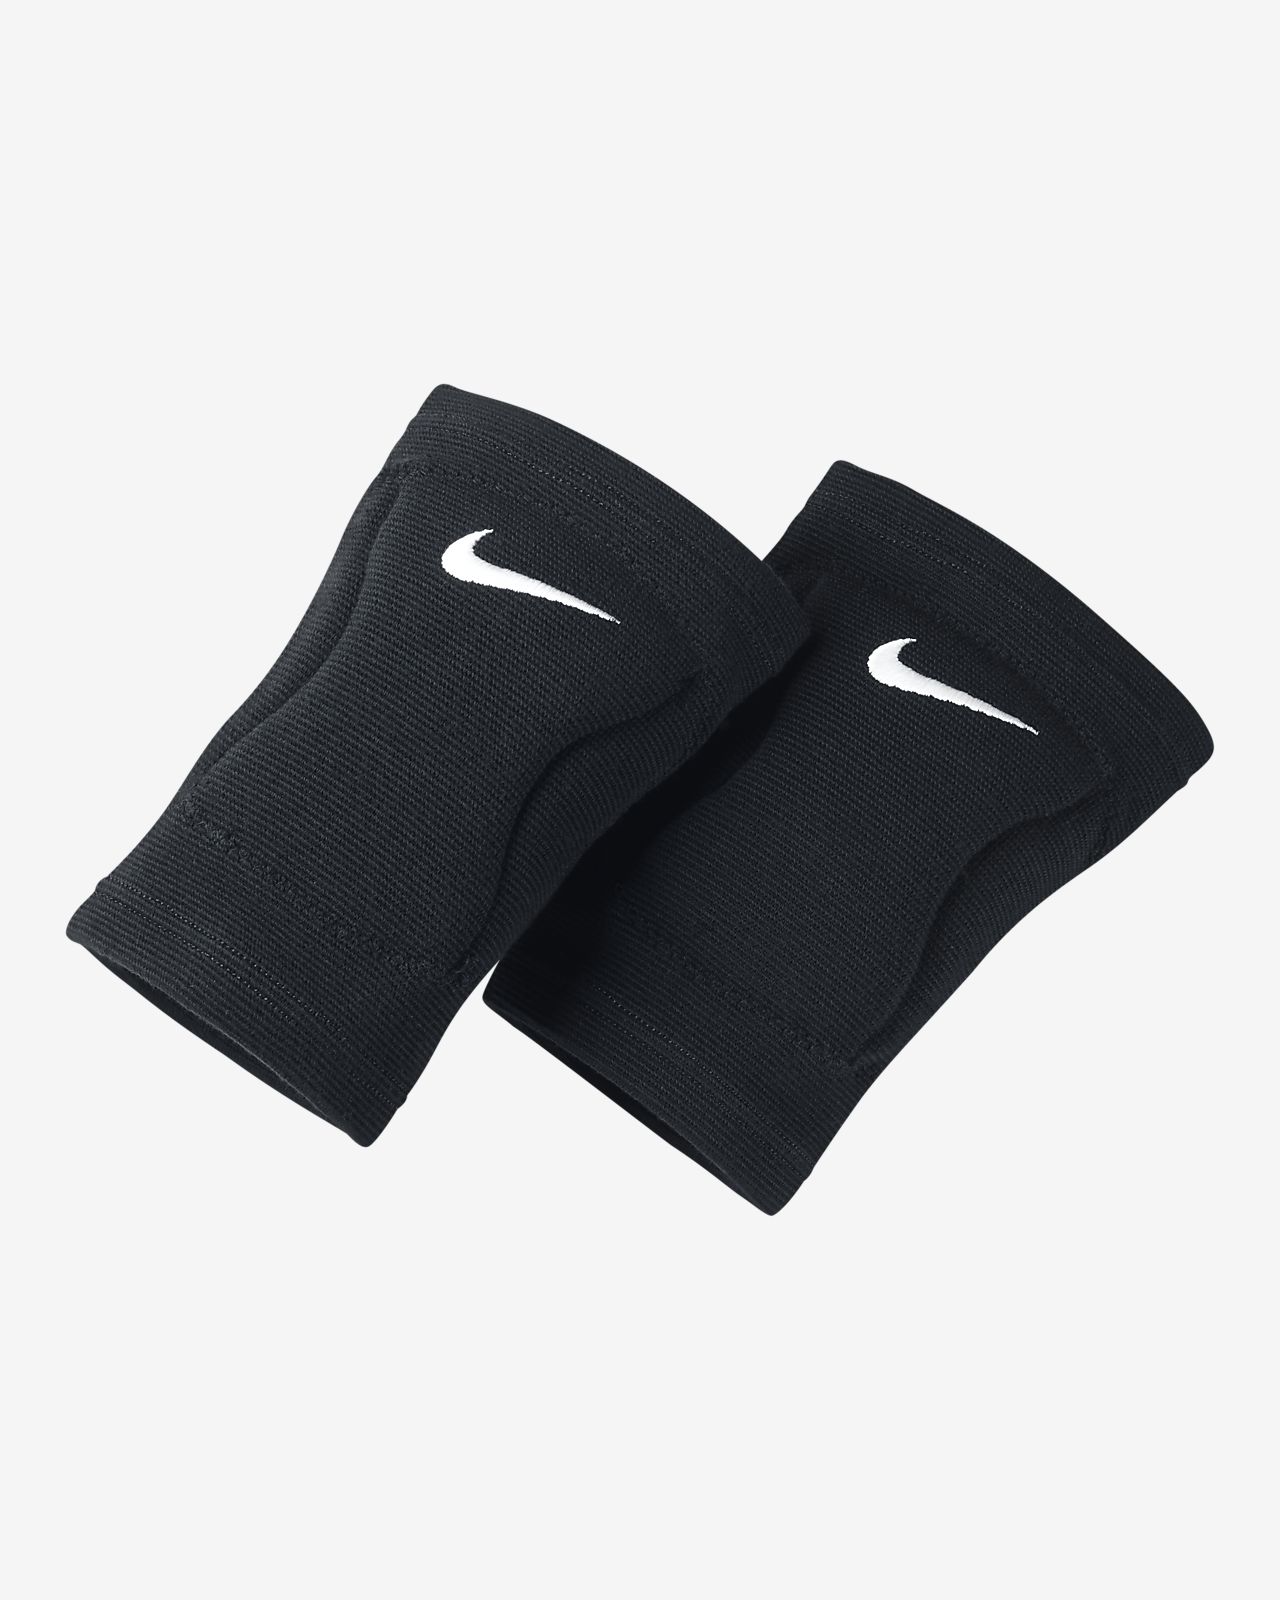 Nike Knee Pads Size Chart